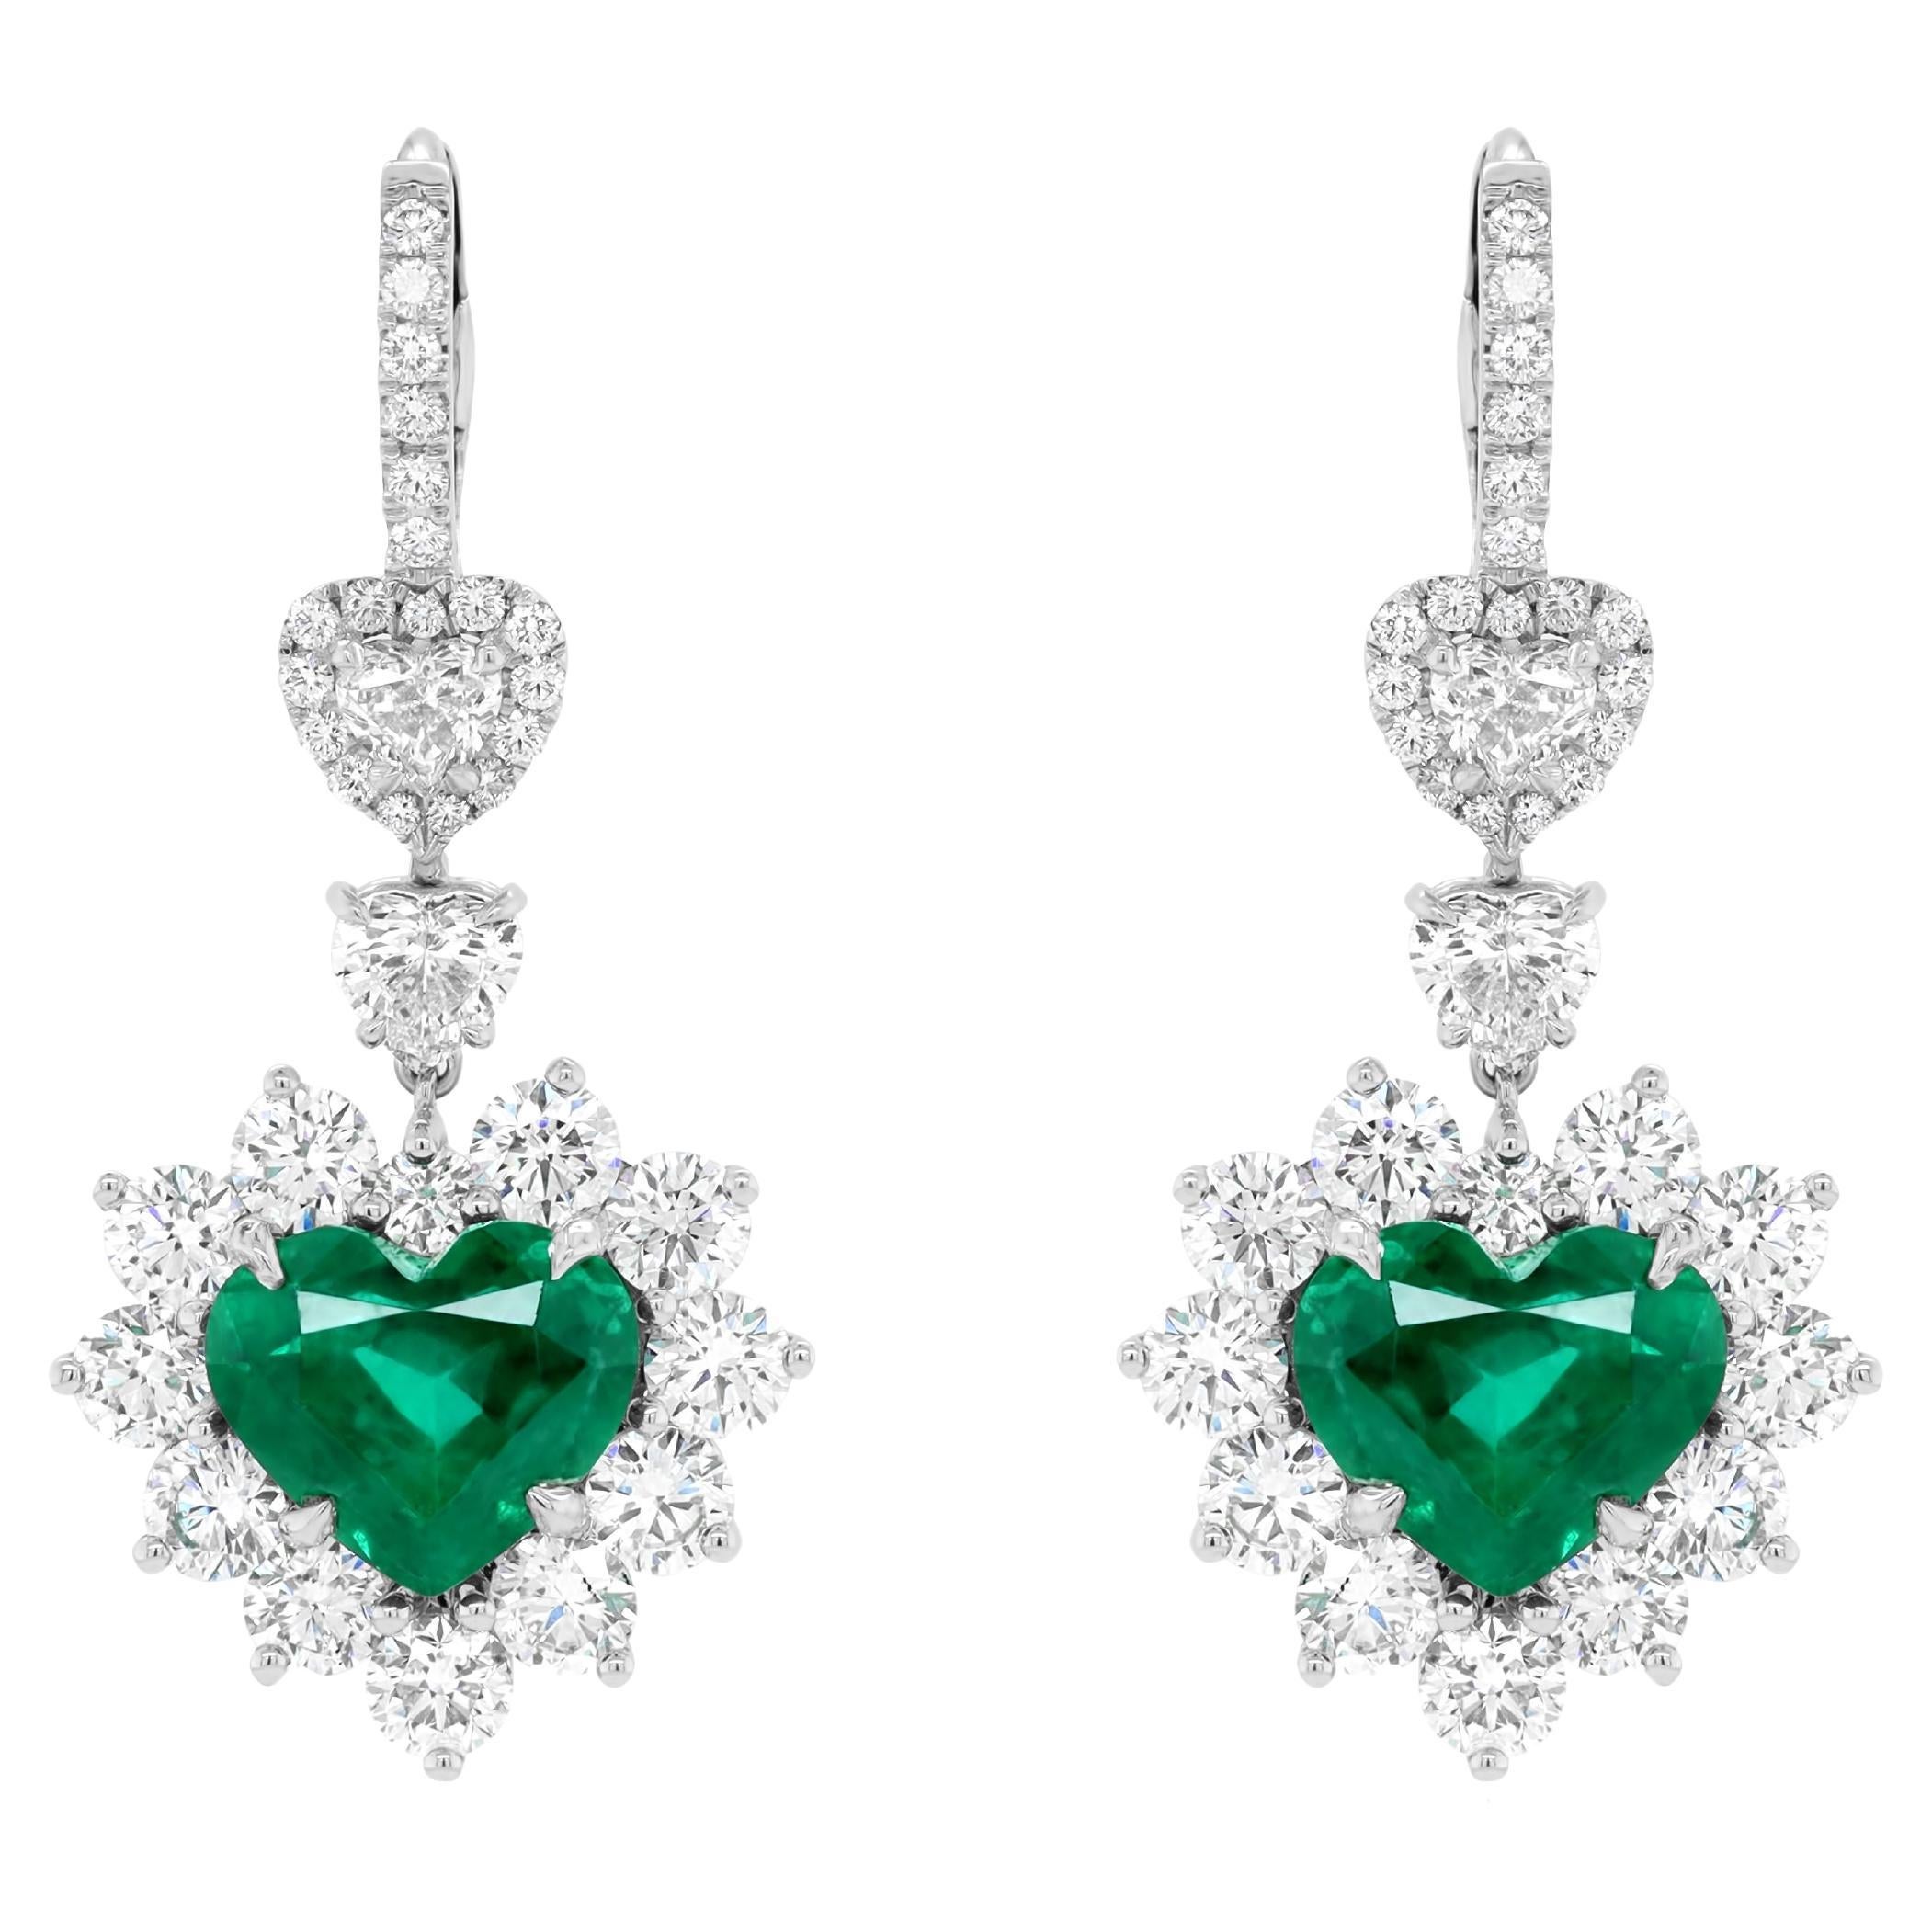 Diana M. zertifizierte 8,16 Karat herzförmige Smaragd-Ohrringe